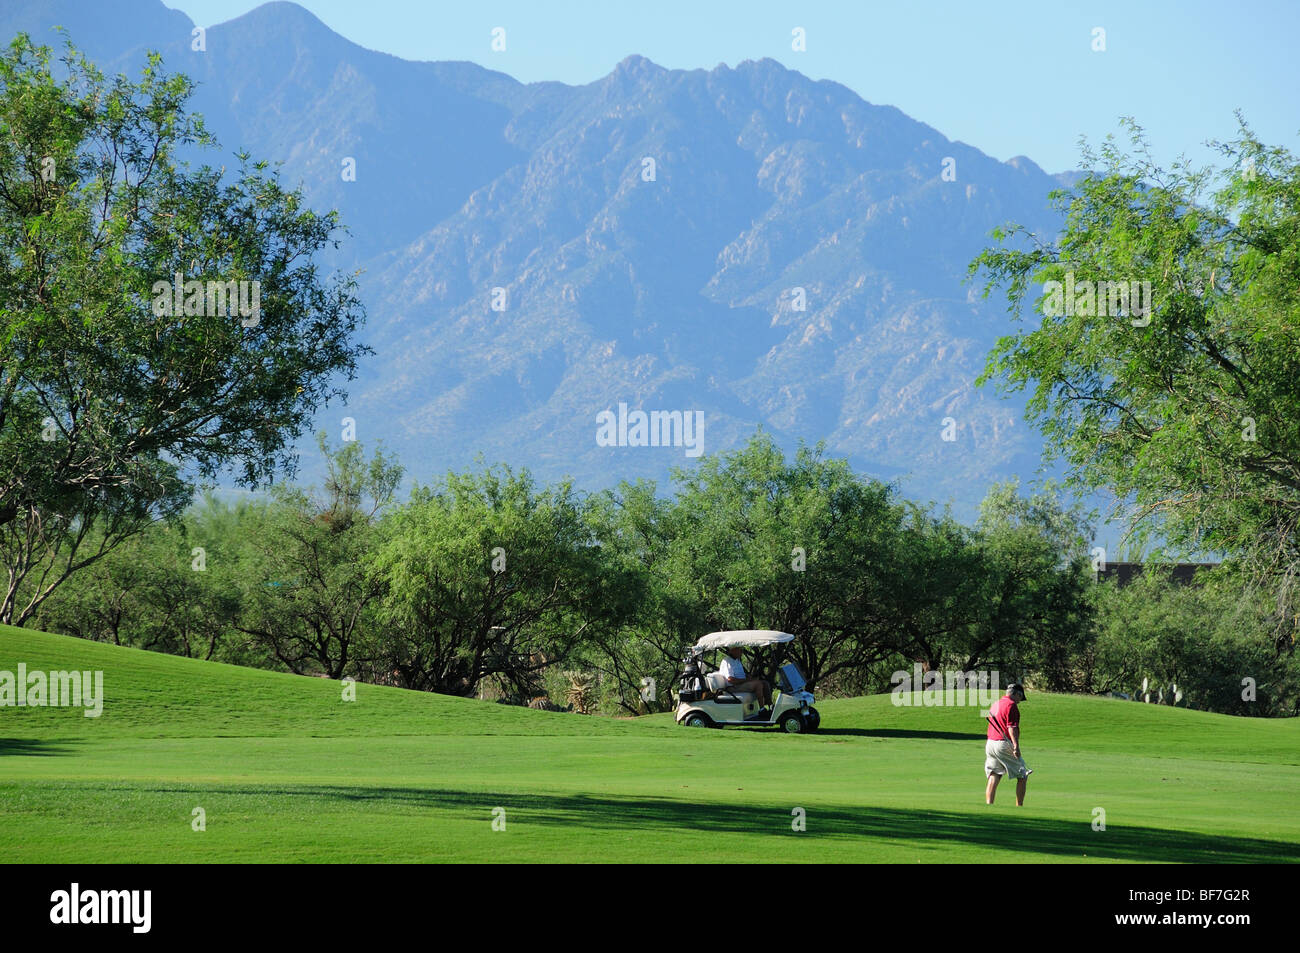 Santa Rita Golf Club in Corona, Arizona, USA